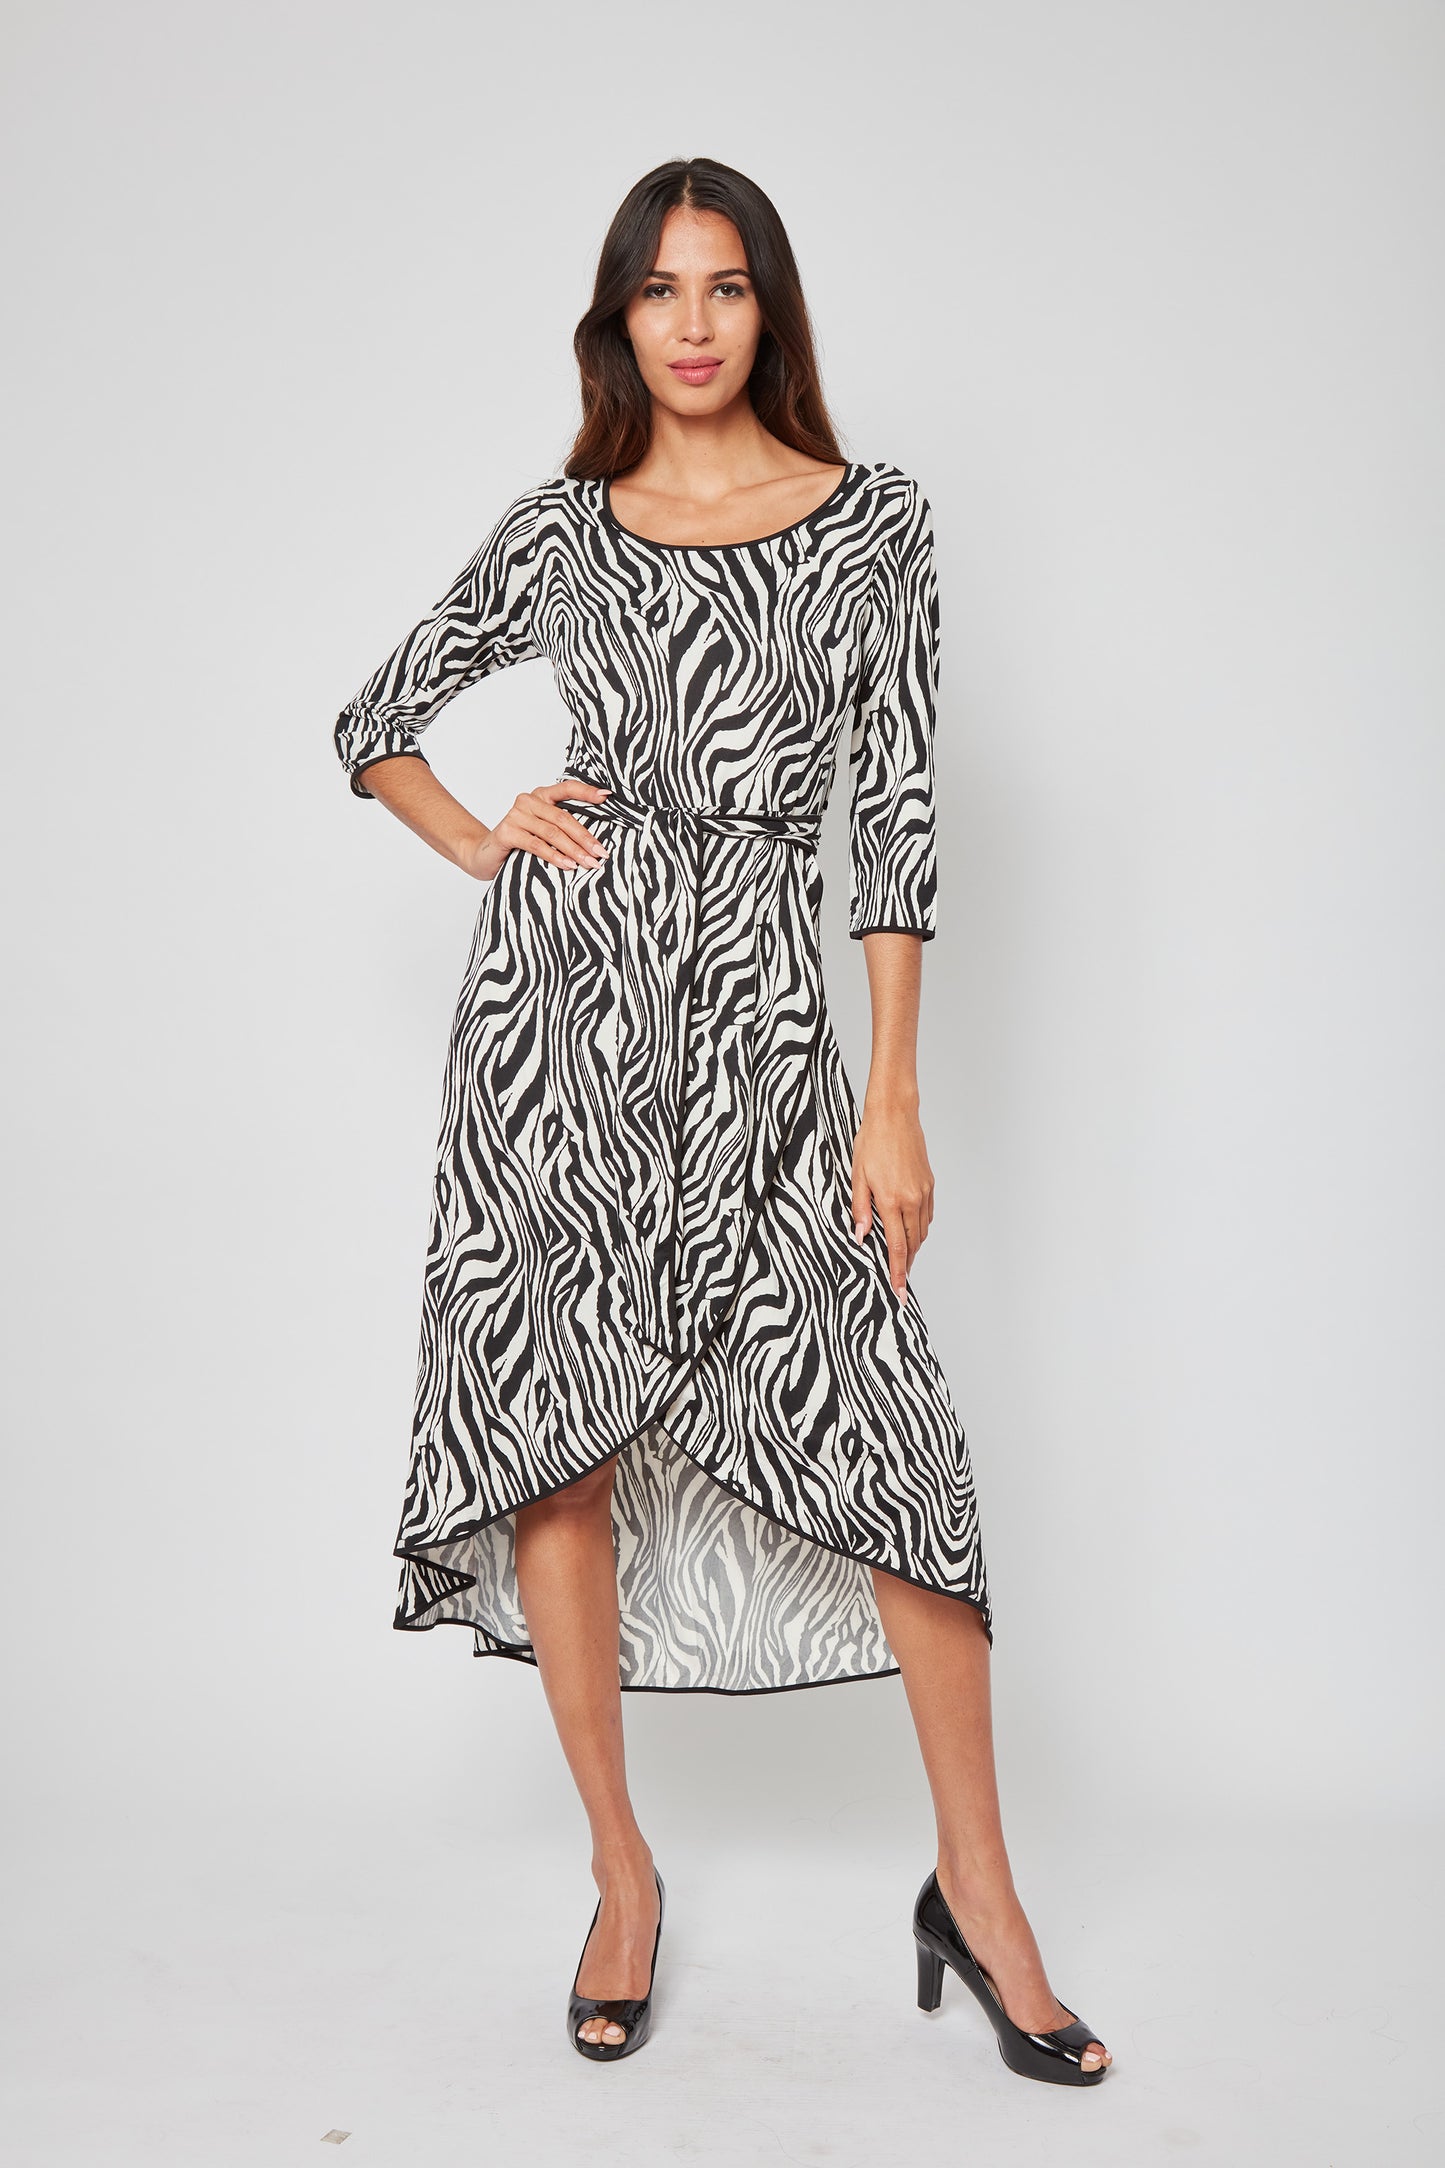 Classic and Chic Zebra Printed Dress